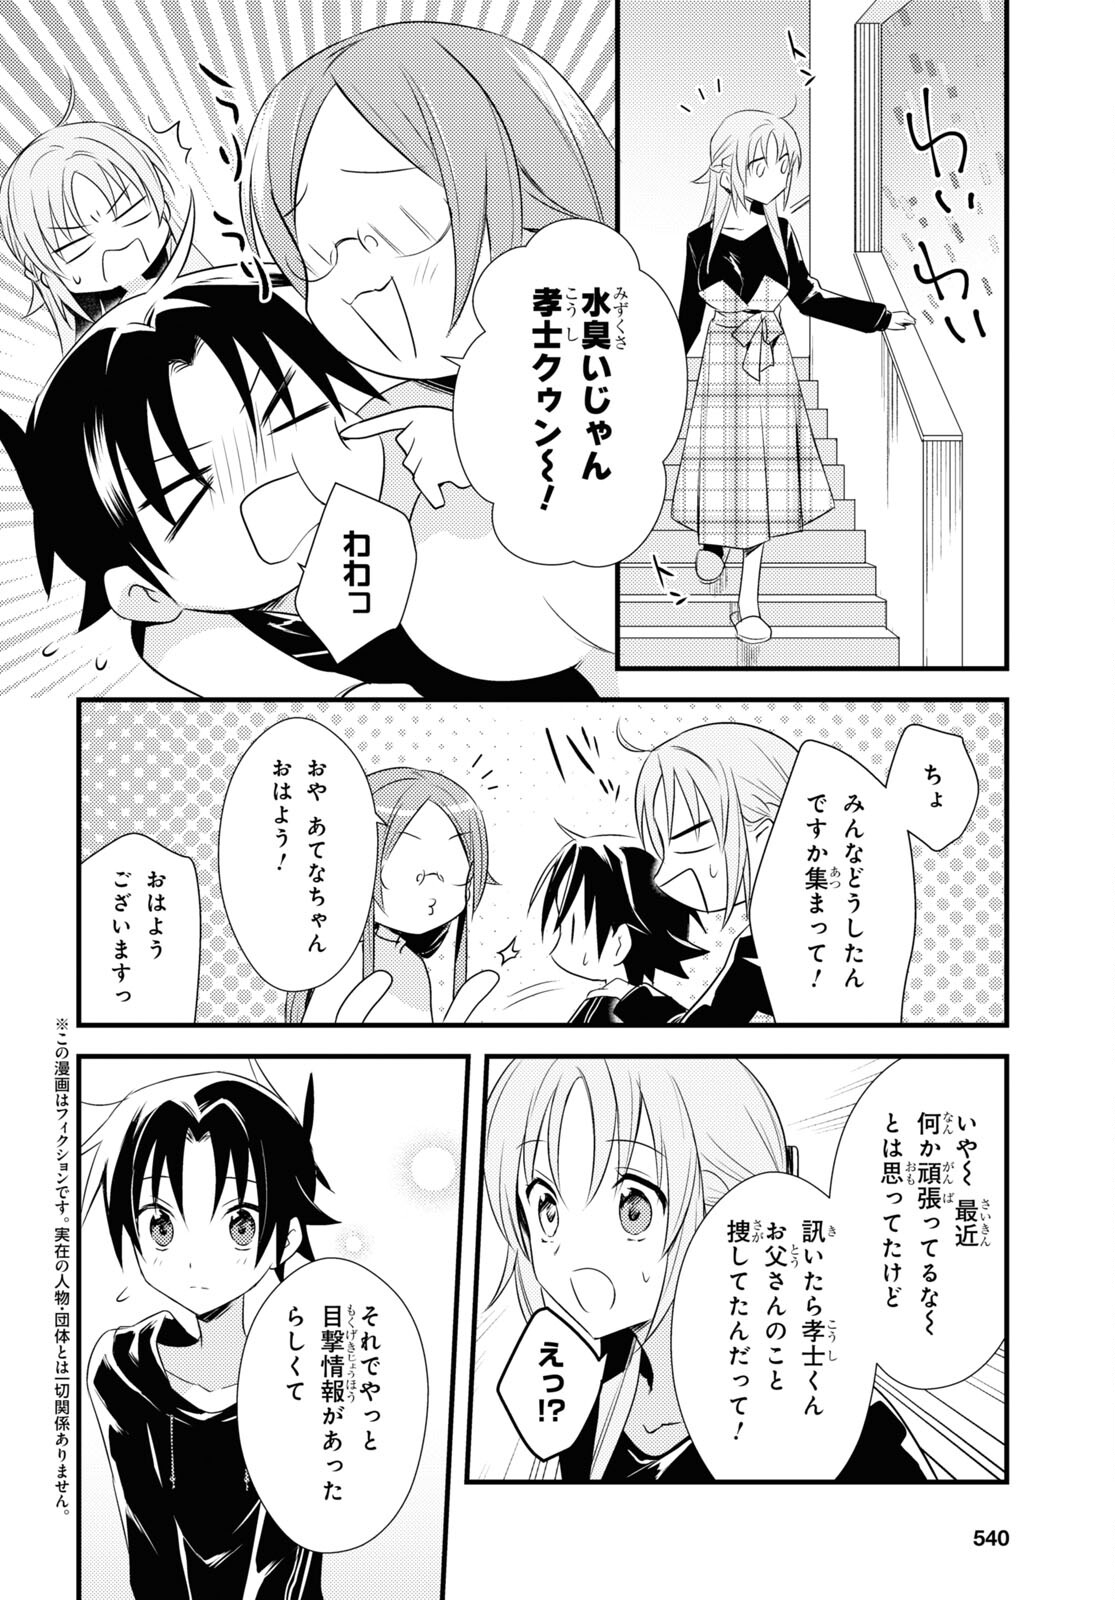 Megami-ryou no Ryoubo-kun - Chapter 52 - Page 1